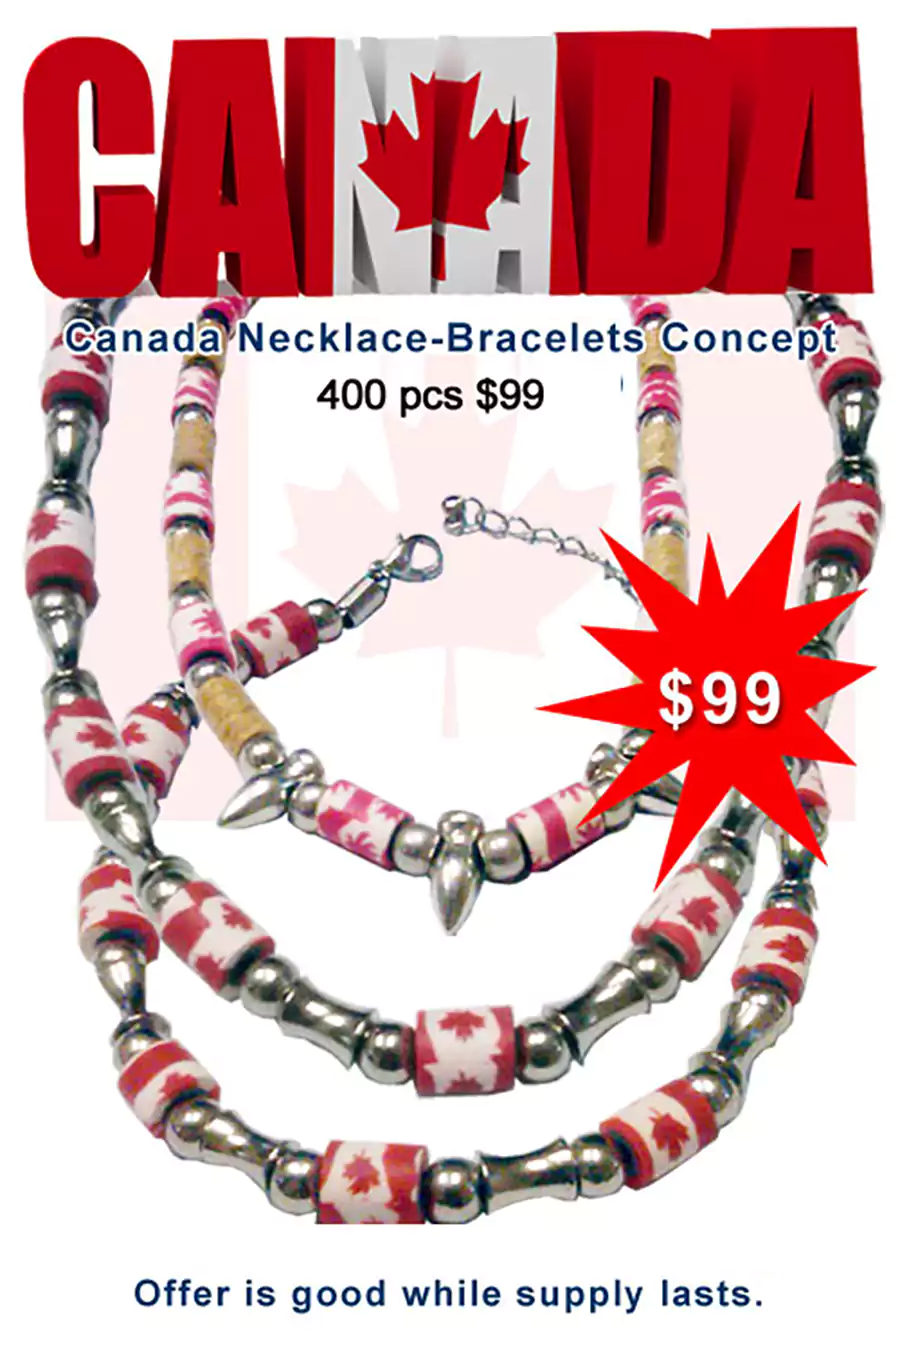 Clearance: Canada Necklace-Bracelets Concept (CL)